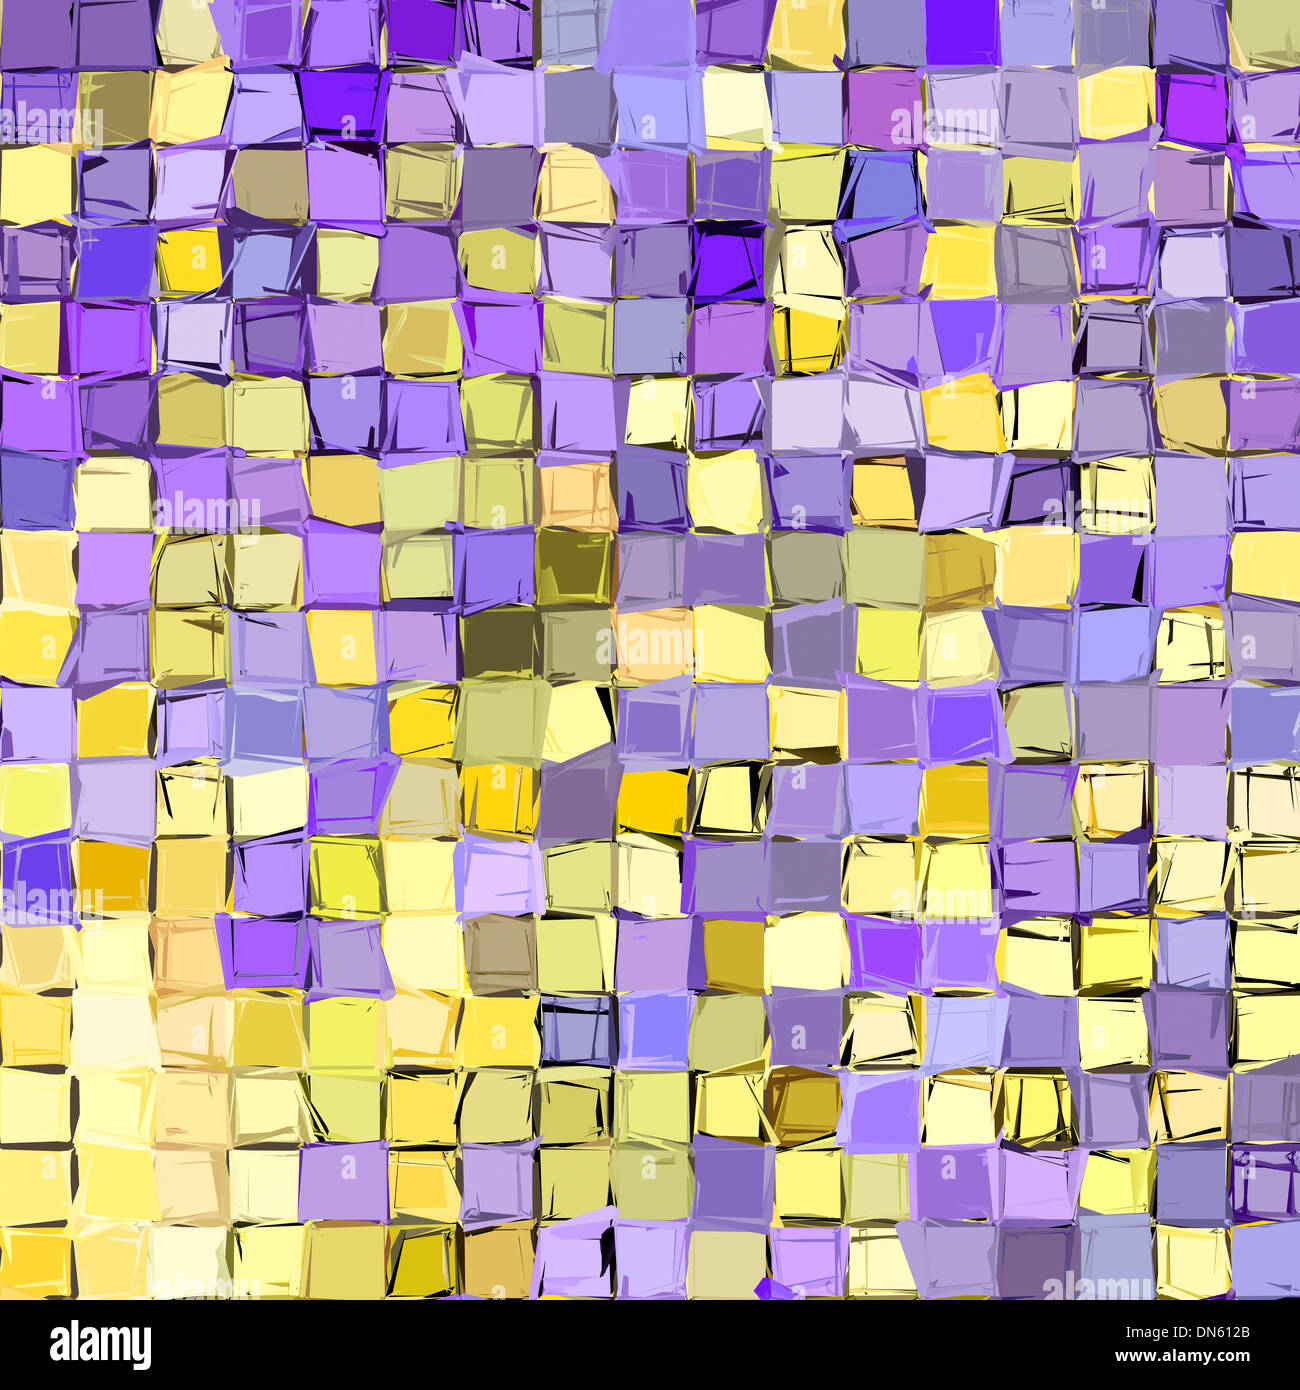 Abstract Tile Mosaic Purple Yellow Backdrop Stock Photo Alamy